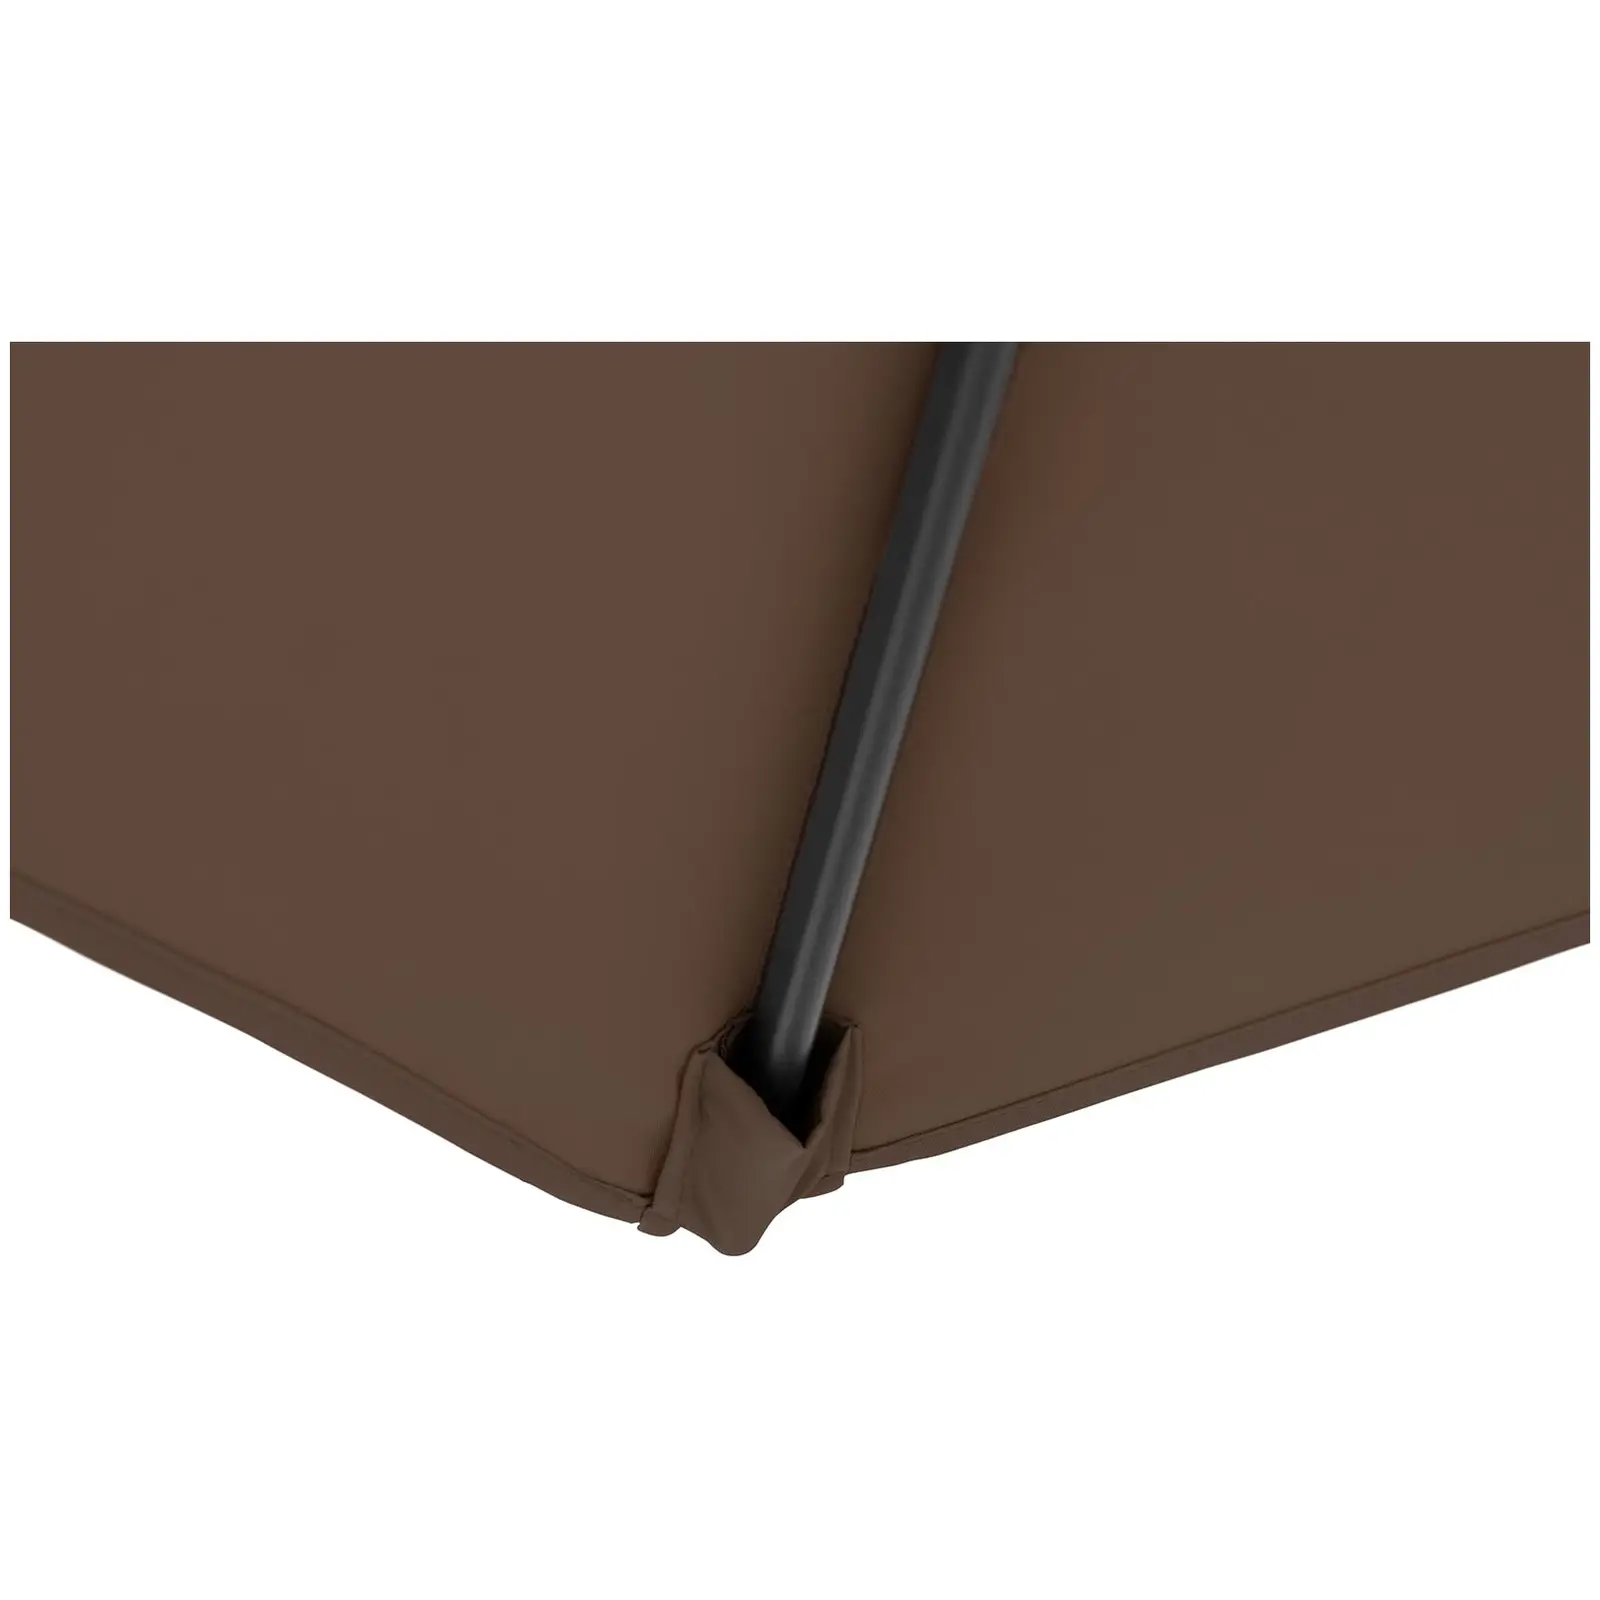 Factory second Large Outdoor Umbrella - brown - rectangular - 200 x 300 cm - tiltable